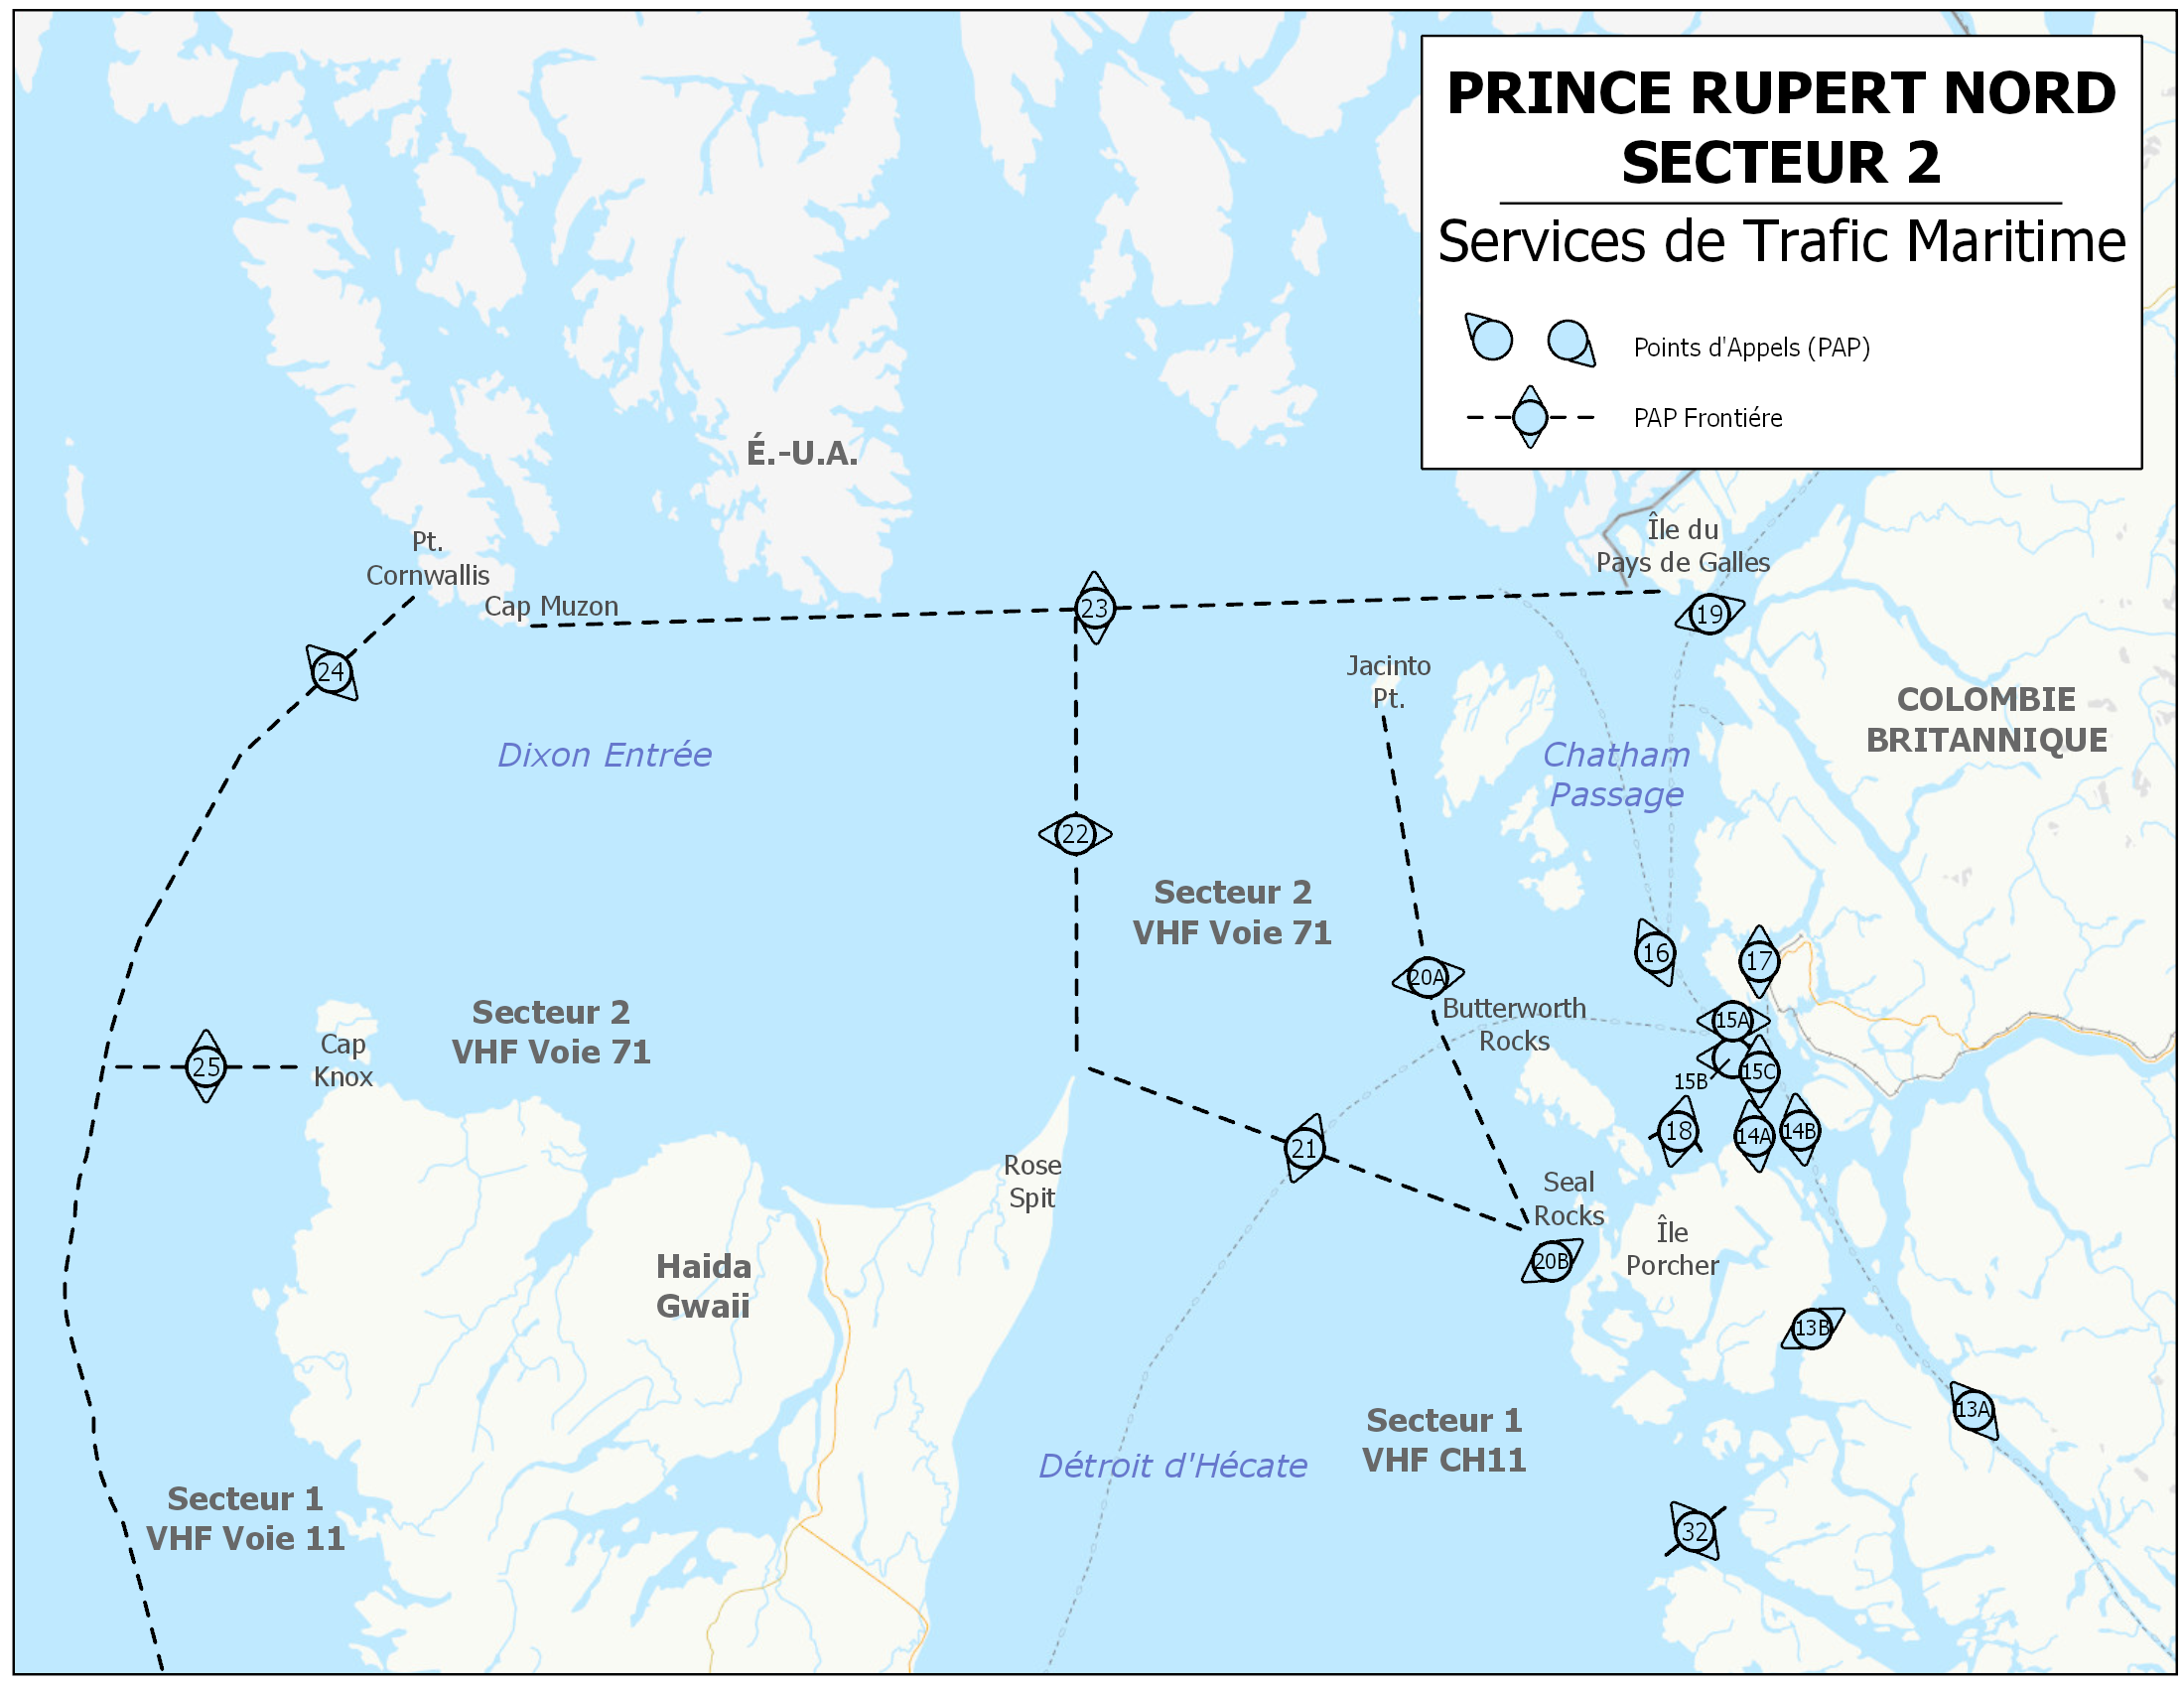 Prince Rupert - Service du trafic maritime - Secteur 2